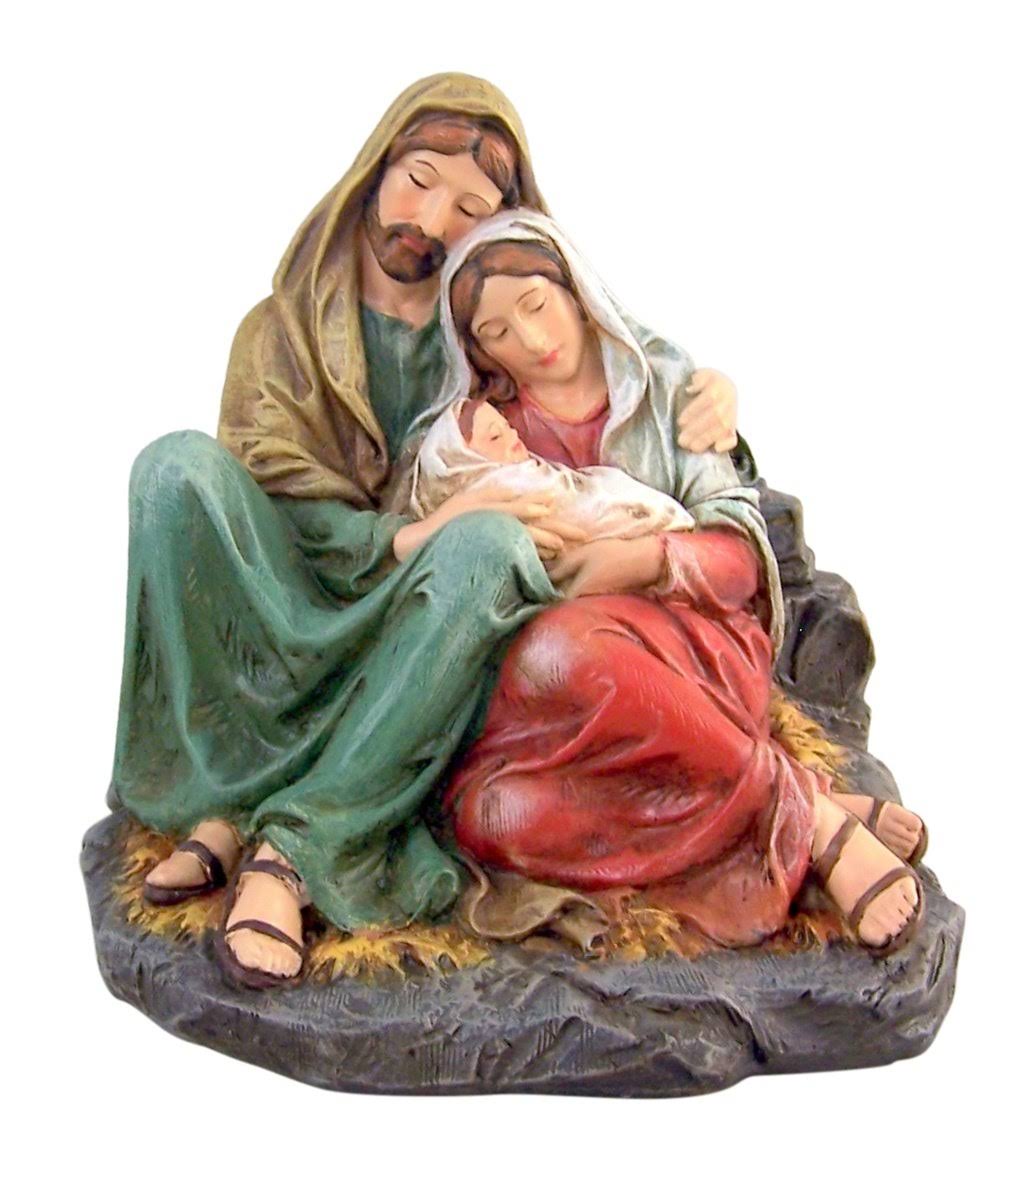 Sleeping Holy Family Figurine Resin Christmas Nativity Statue, 6 inch